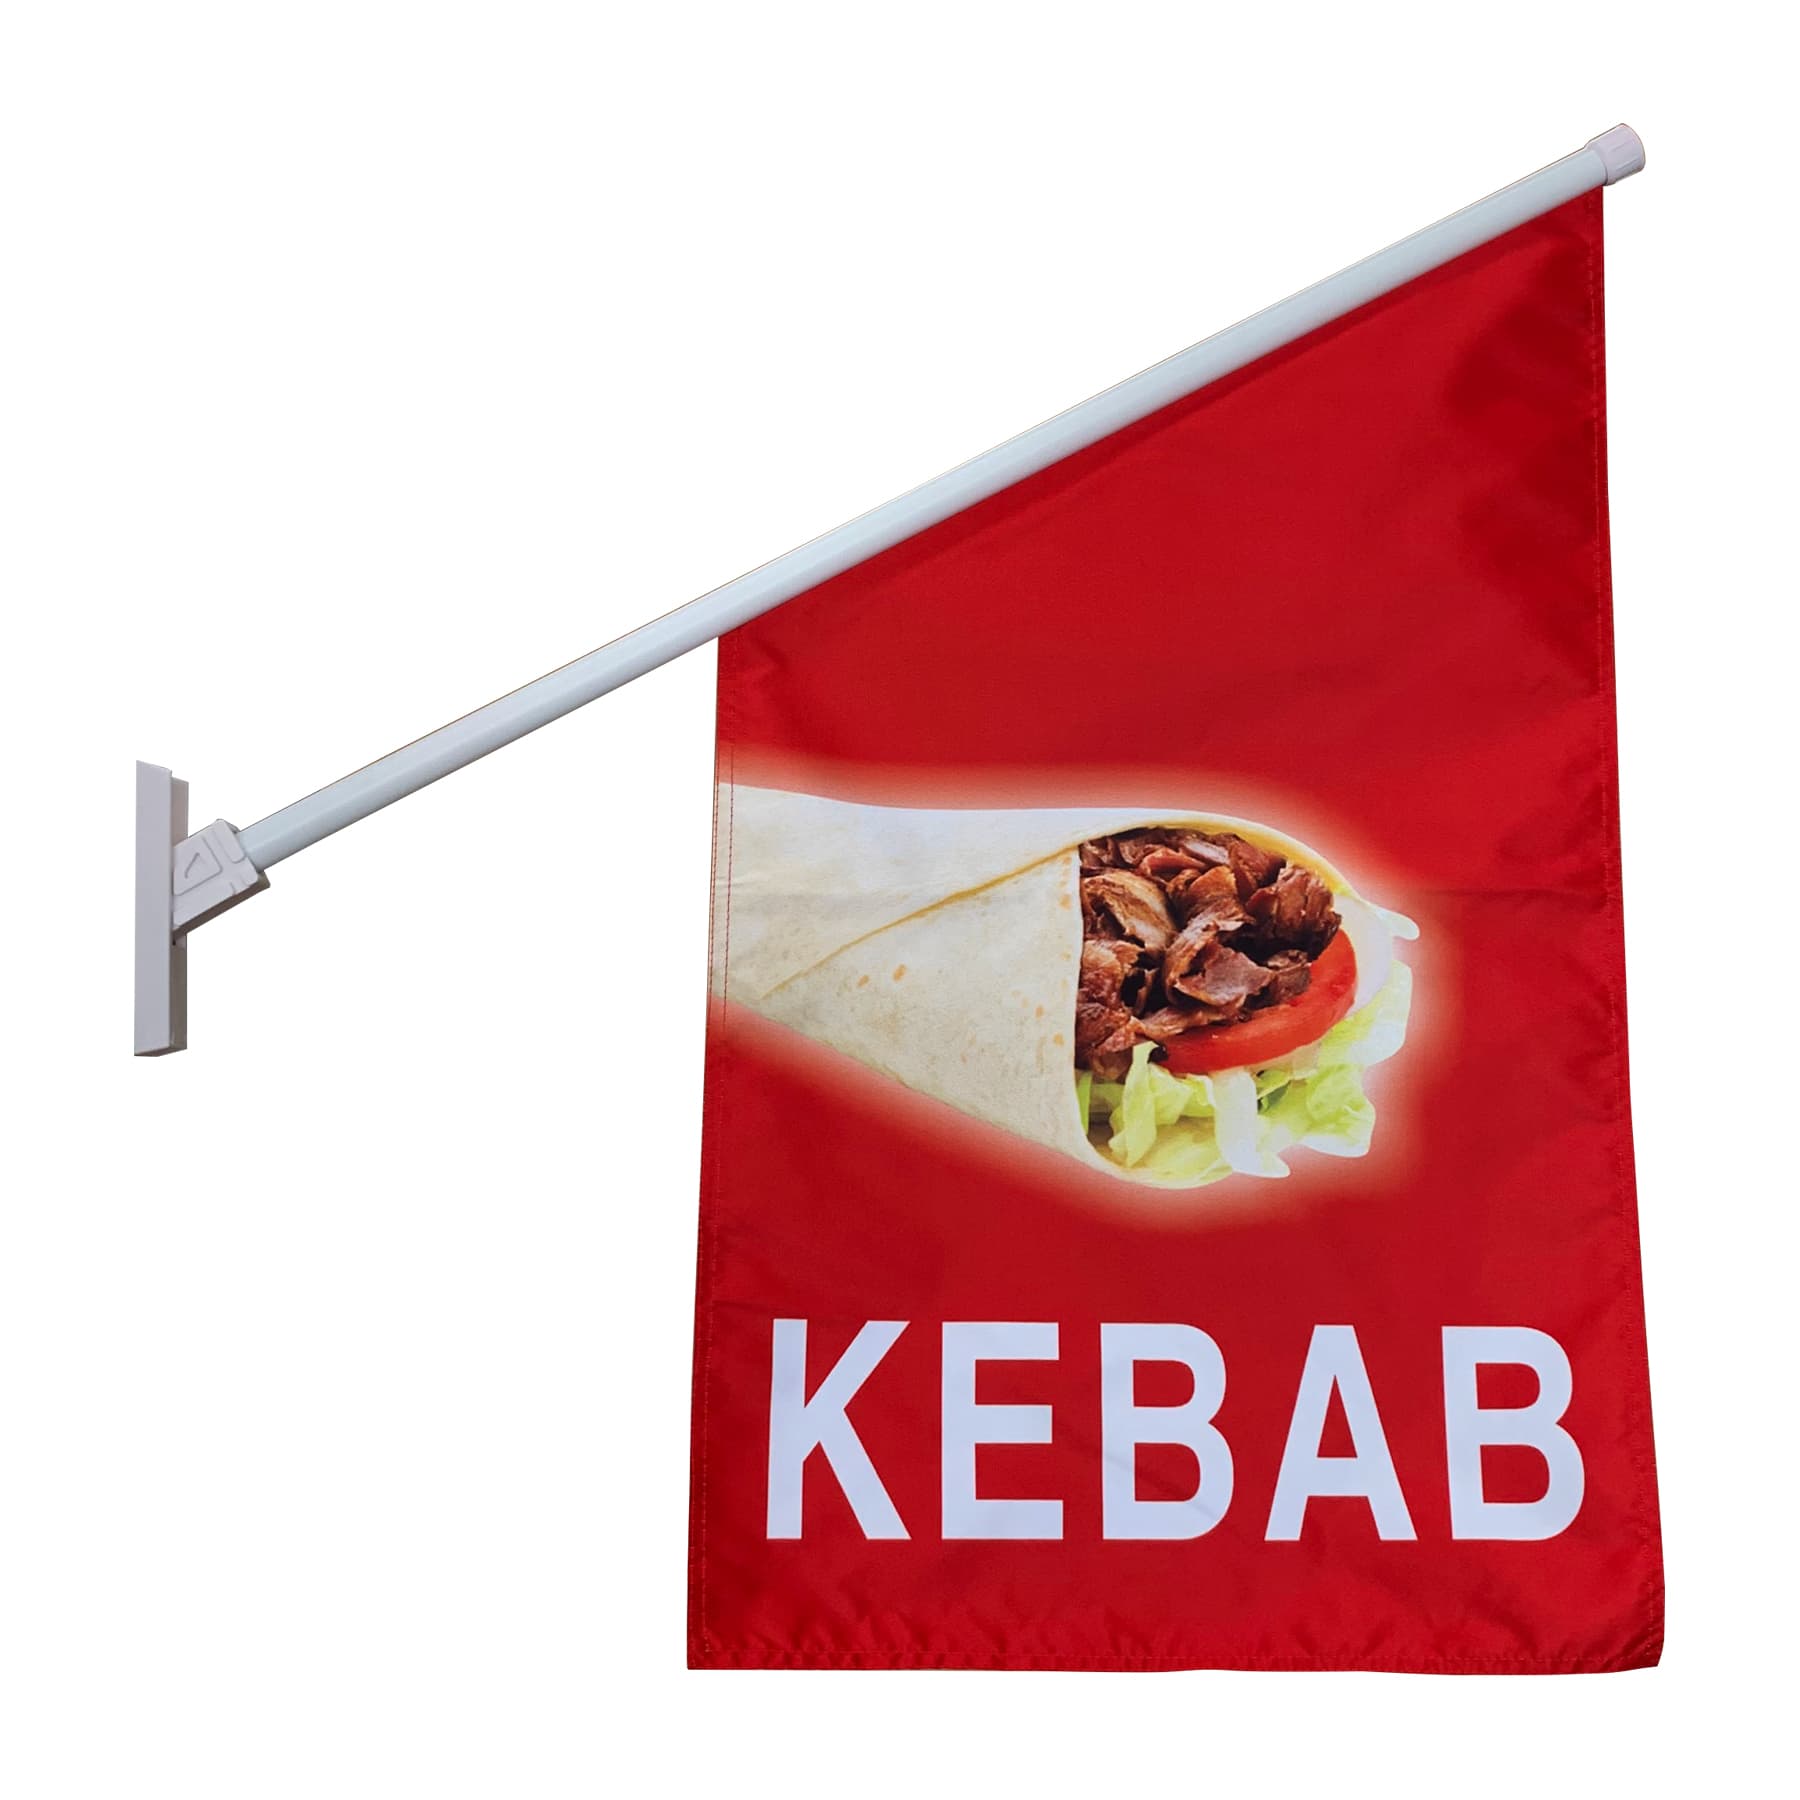 Wall Mounted Kebab Sign Flags